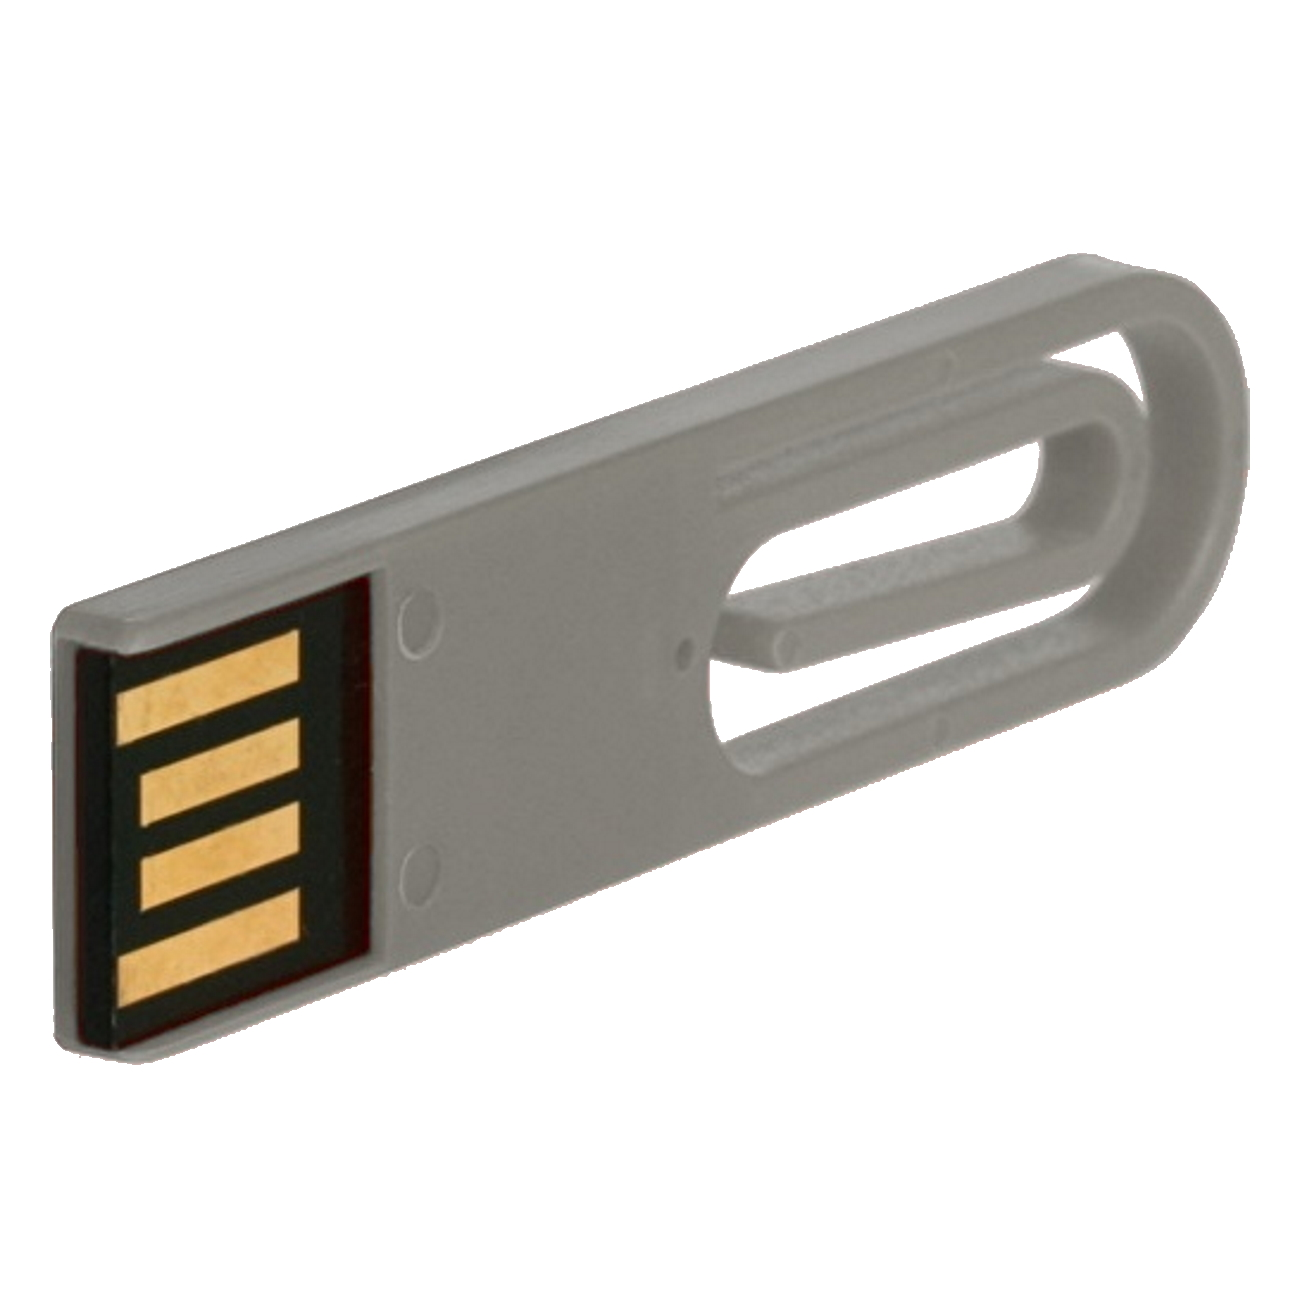 64 GERMANY (Grau, ® USB eCLIP USB-Stick GB)